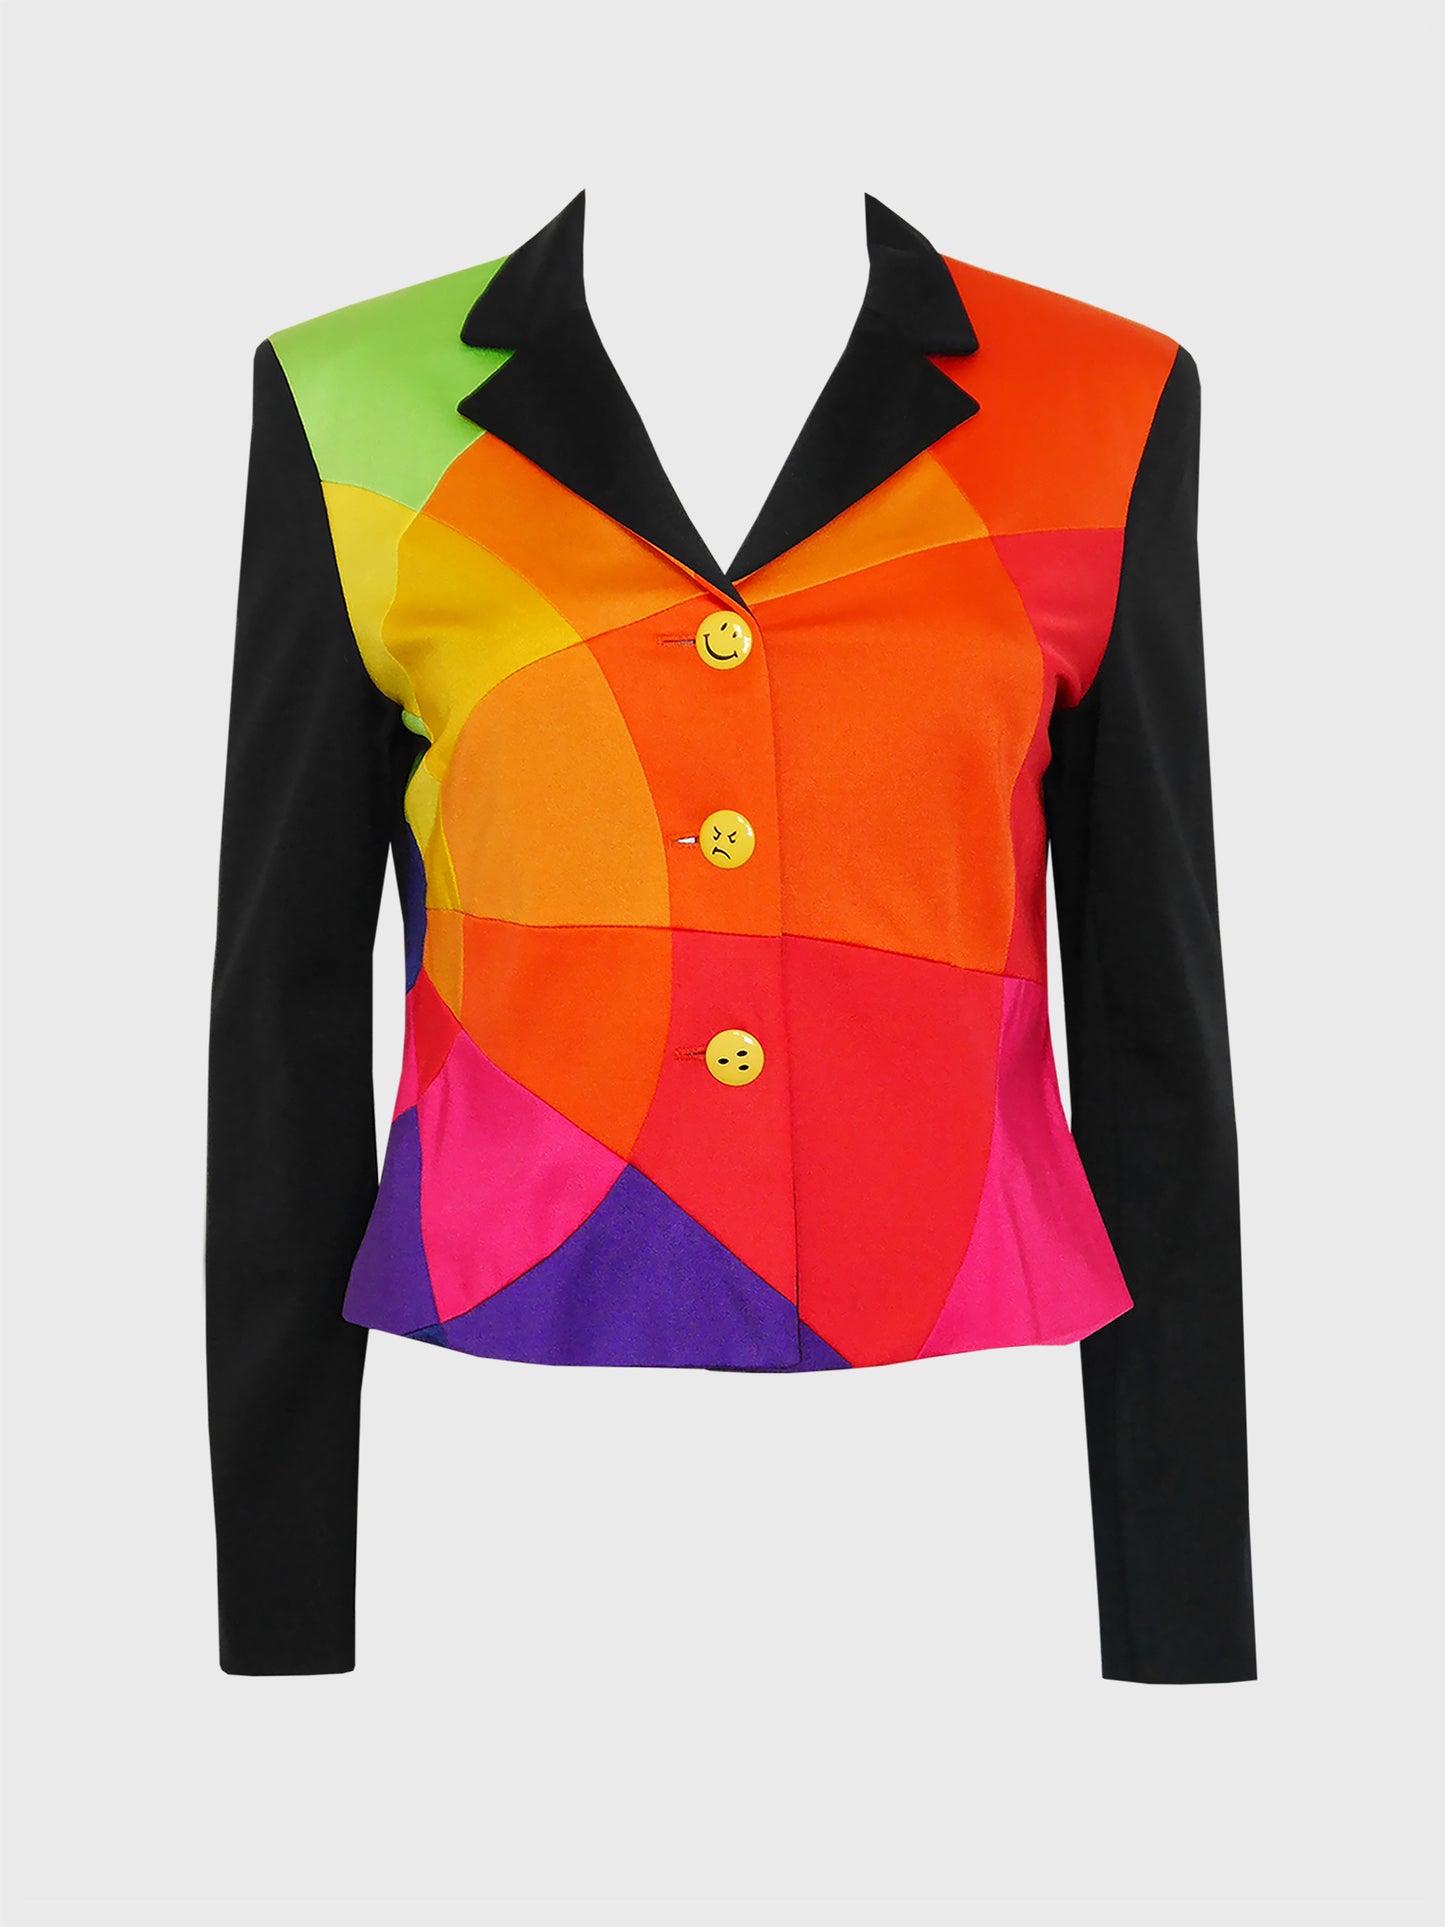 MOSCHINO 1990s Vintage Rainbow Colorblock Smiley Jacket